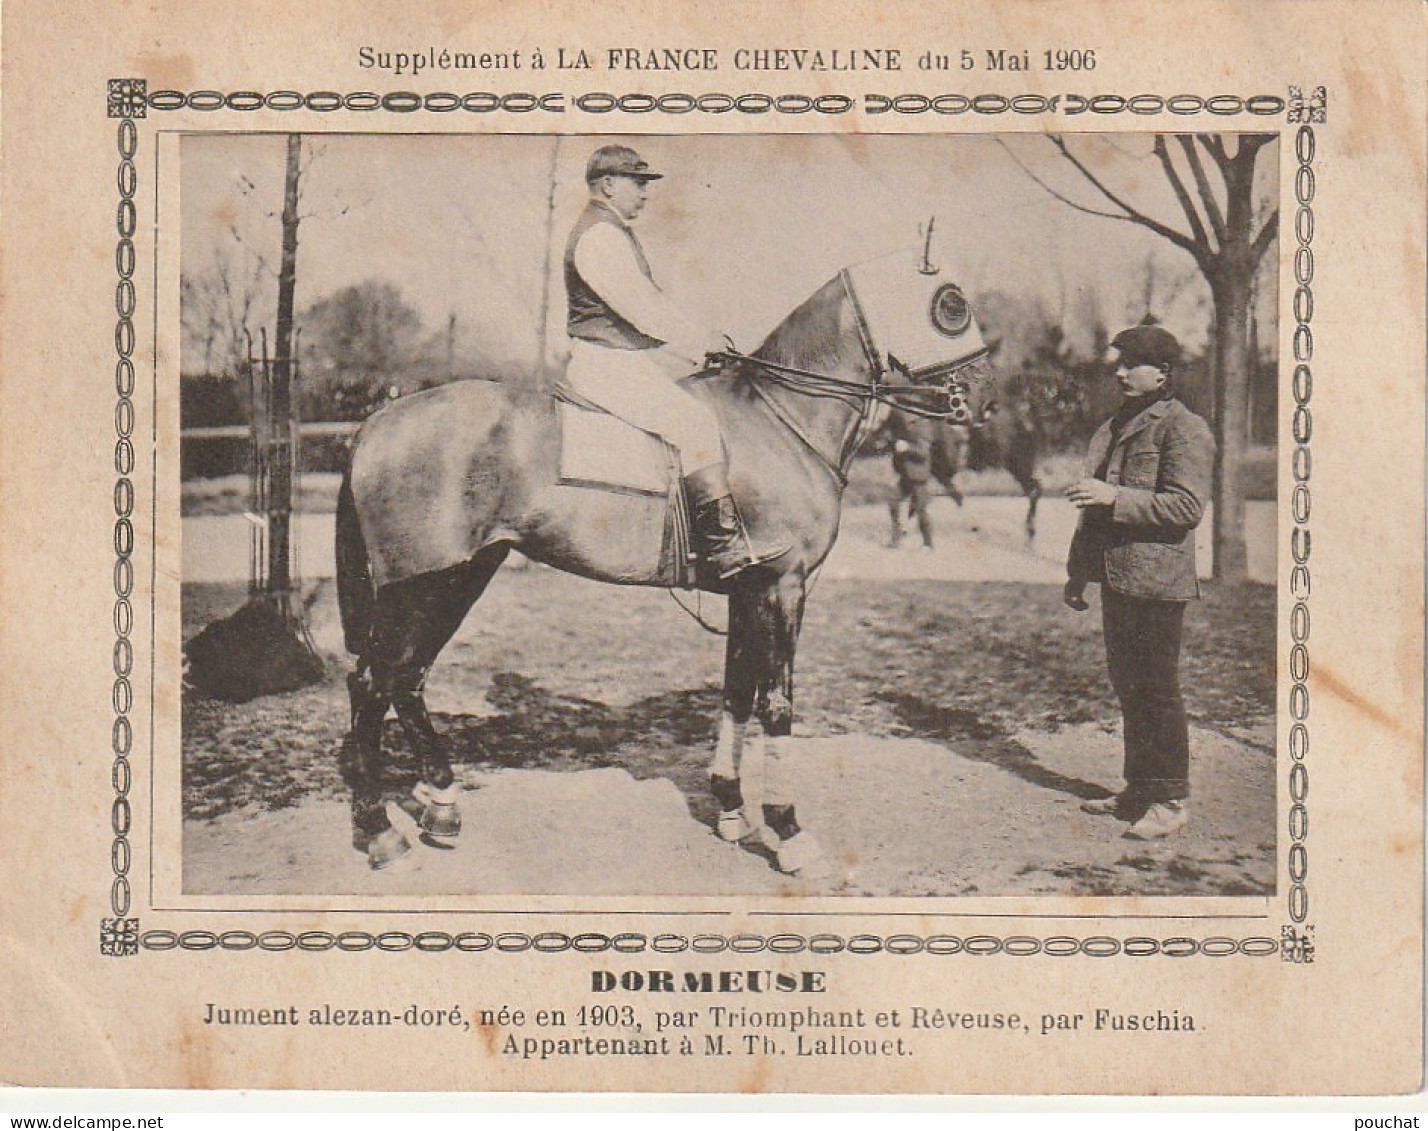 AA+ - " DORMEUSE " - JUMENT ALEZAN APPARTENANT A M. TH. LALLOUET - SUPPL. " FRANCE CHEVALINE " MAI 1906 - Horse Show